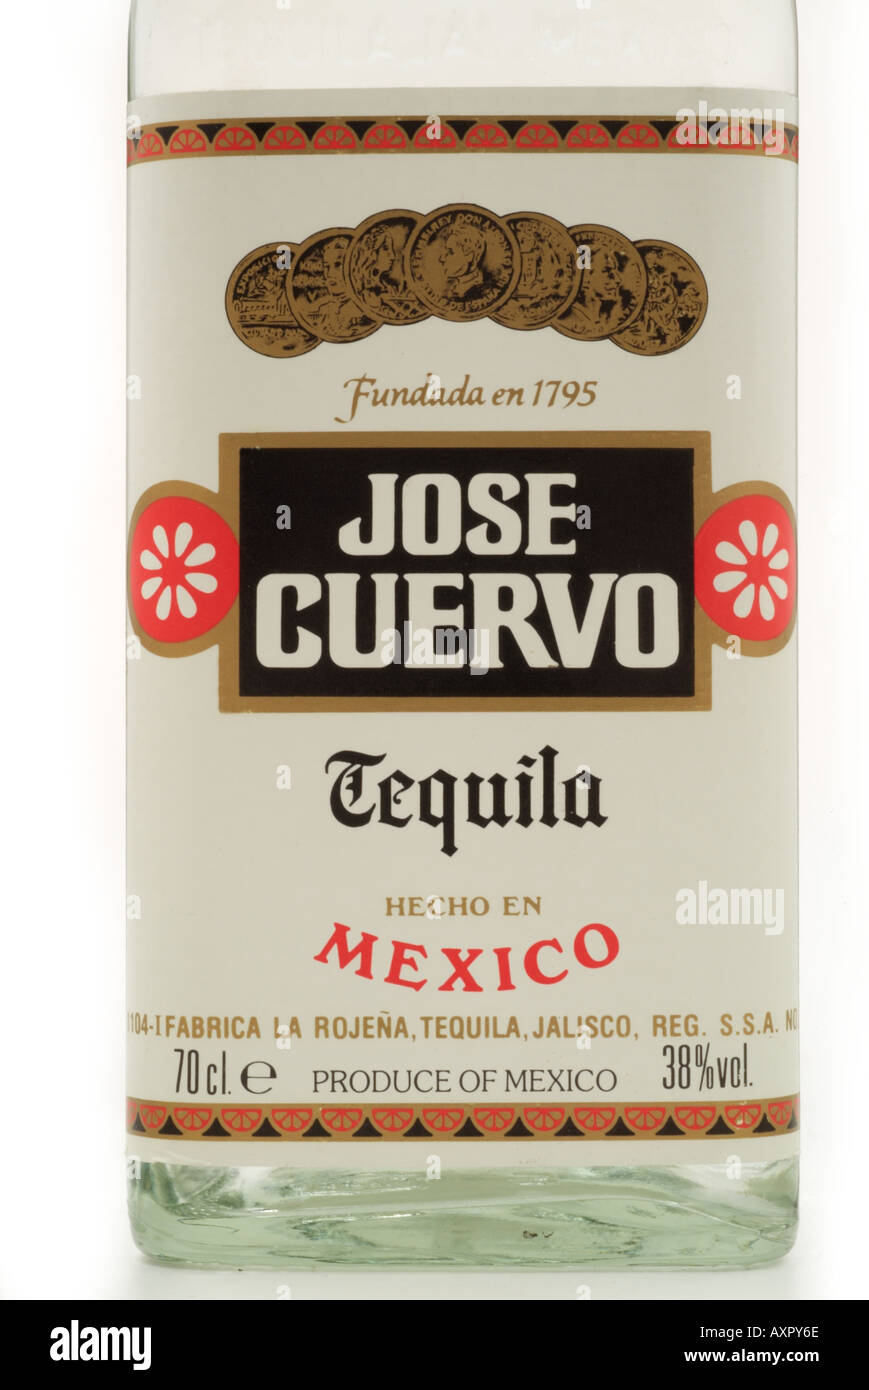 Jose cuervo tequila hecho en jalisco mexico imported fundada 1795 Stock Photo